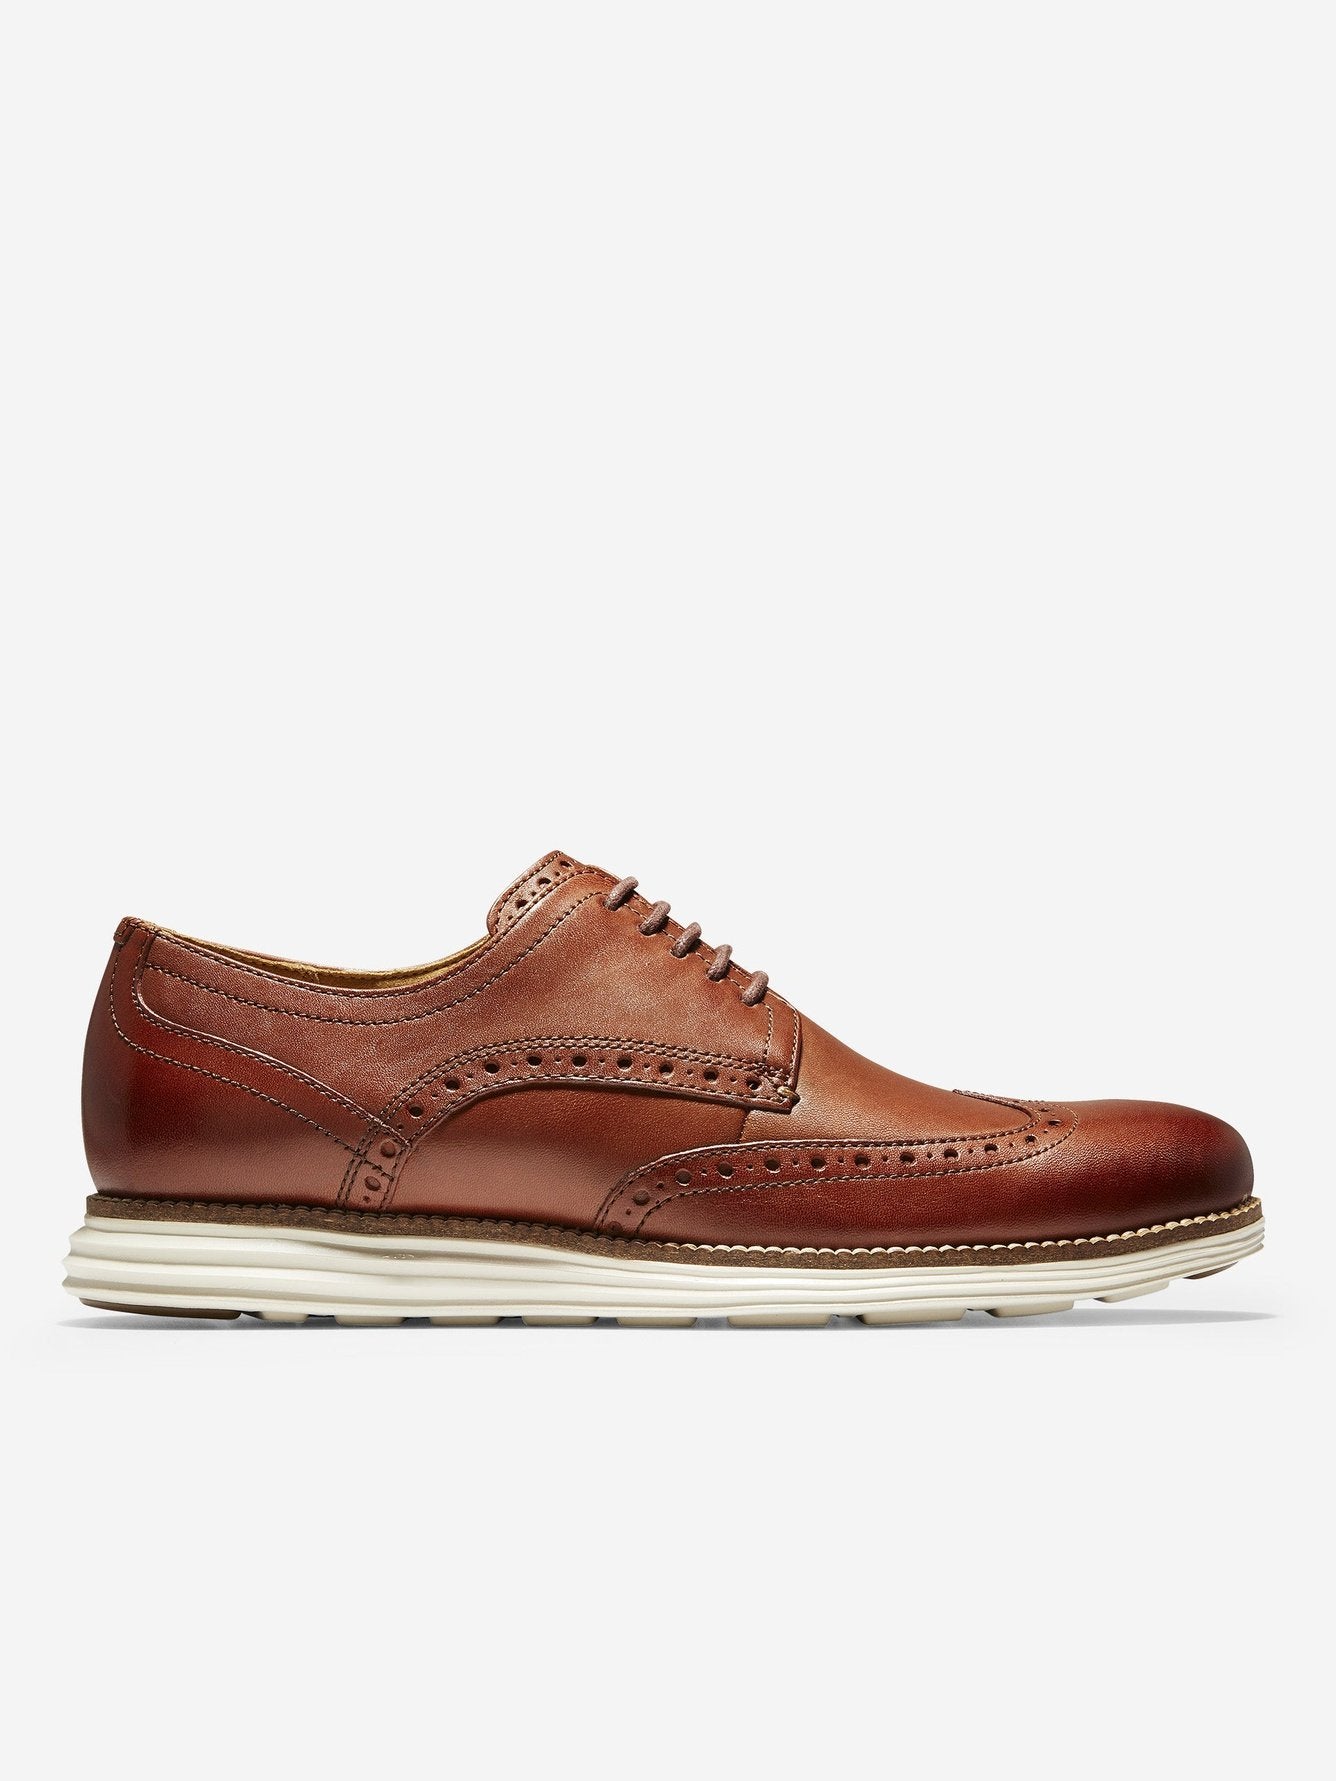 Cole Haan Men's Original Grand Wingtip Oxford Shoes Woodbury/Ivory C20778.